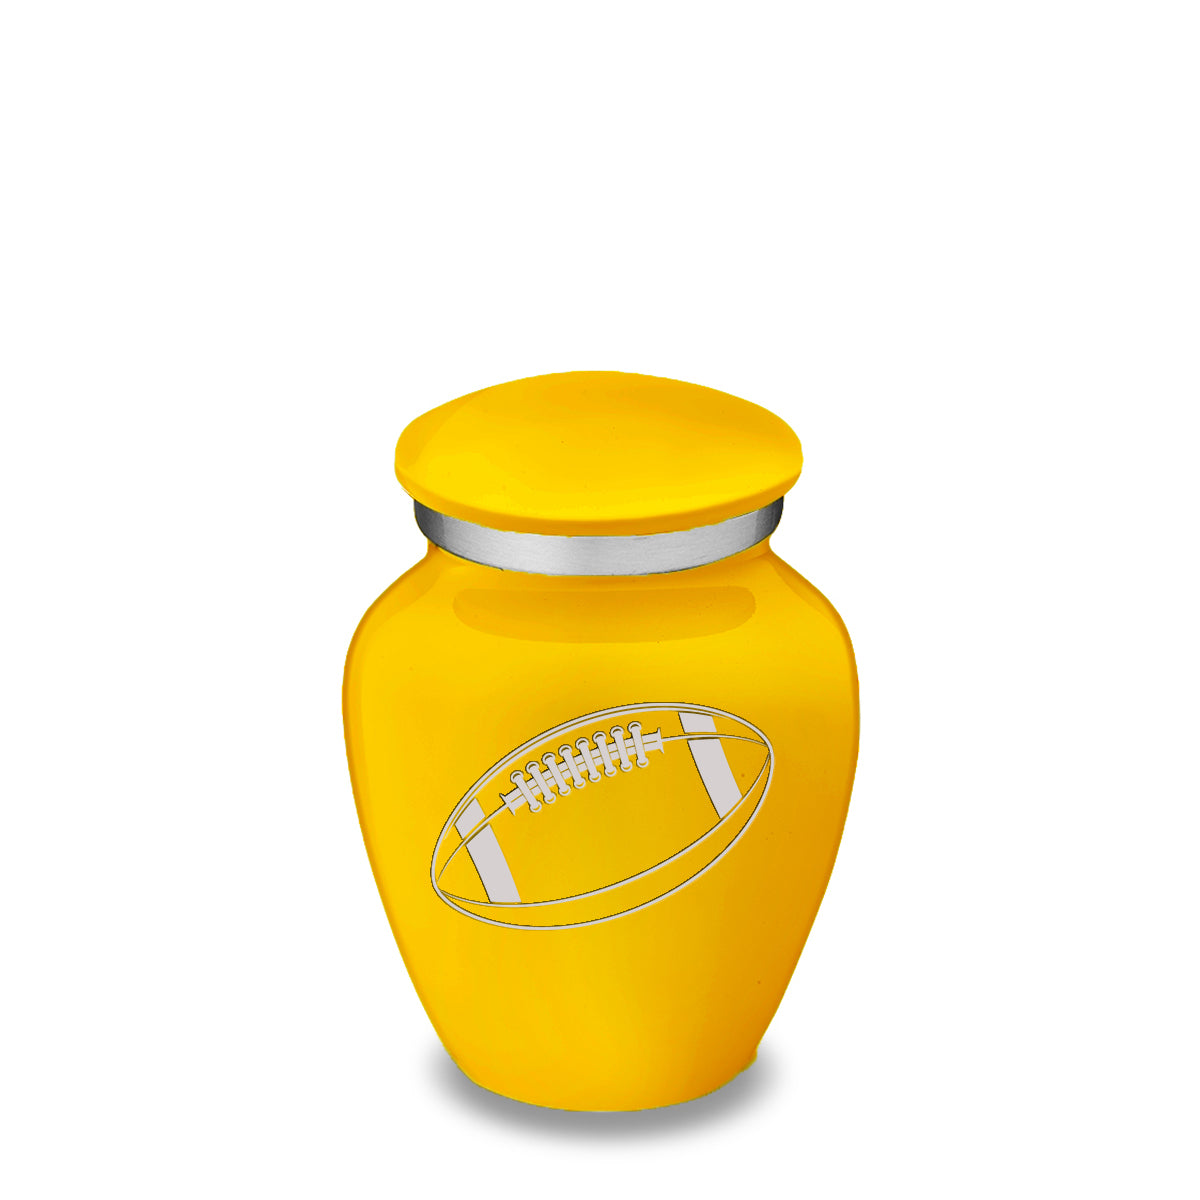 Keepsake Embrace Yellow Football Cremation Urn